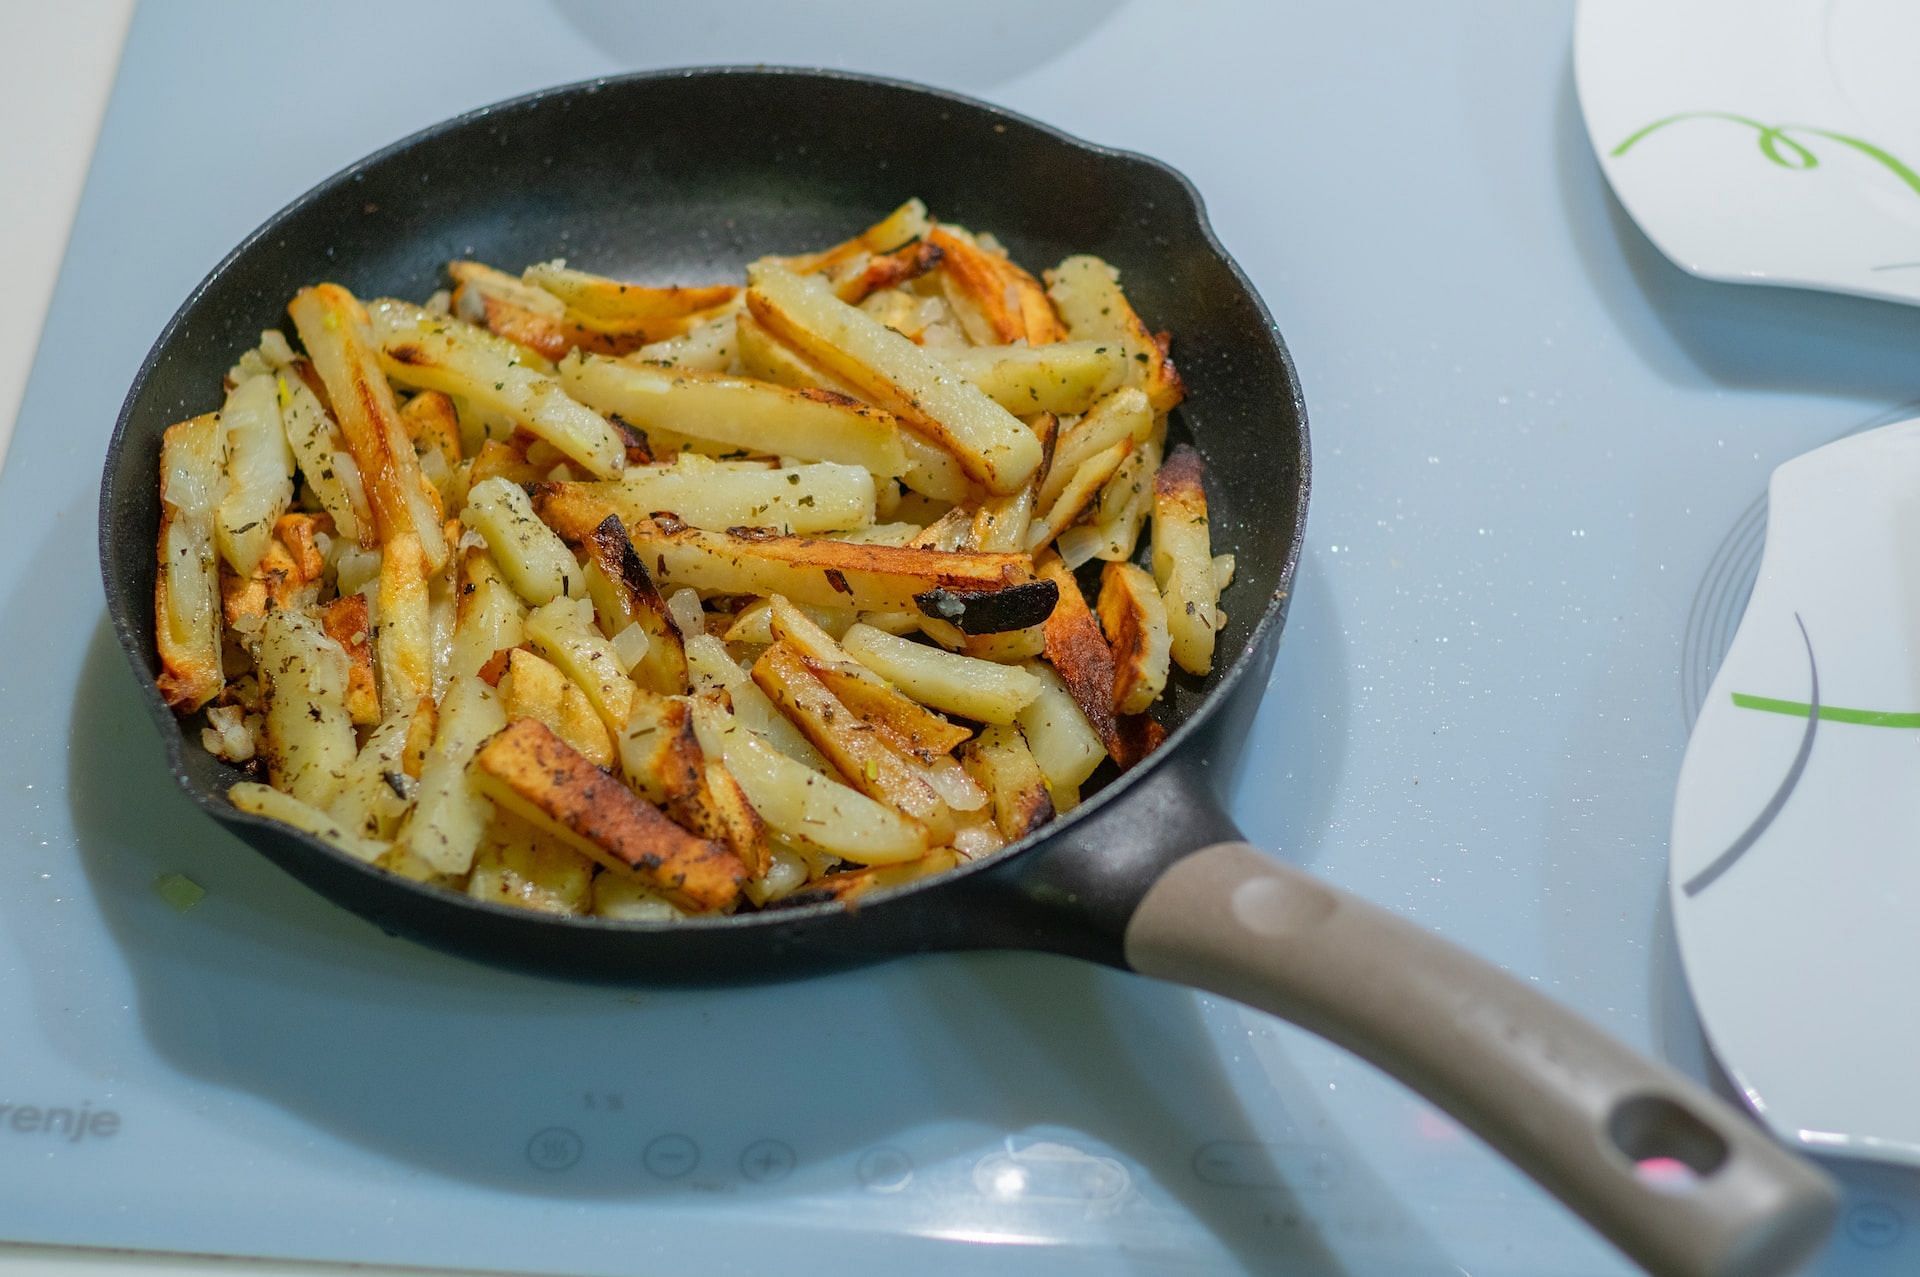 Fries (Photo by Elena Mozhvilo on Unsplash)